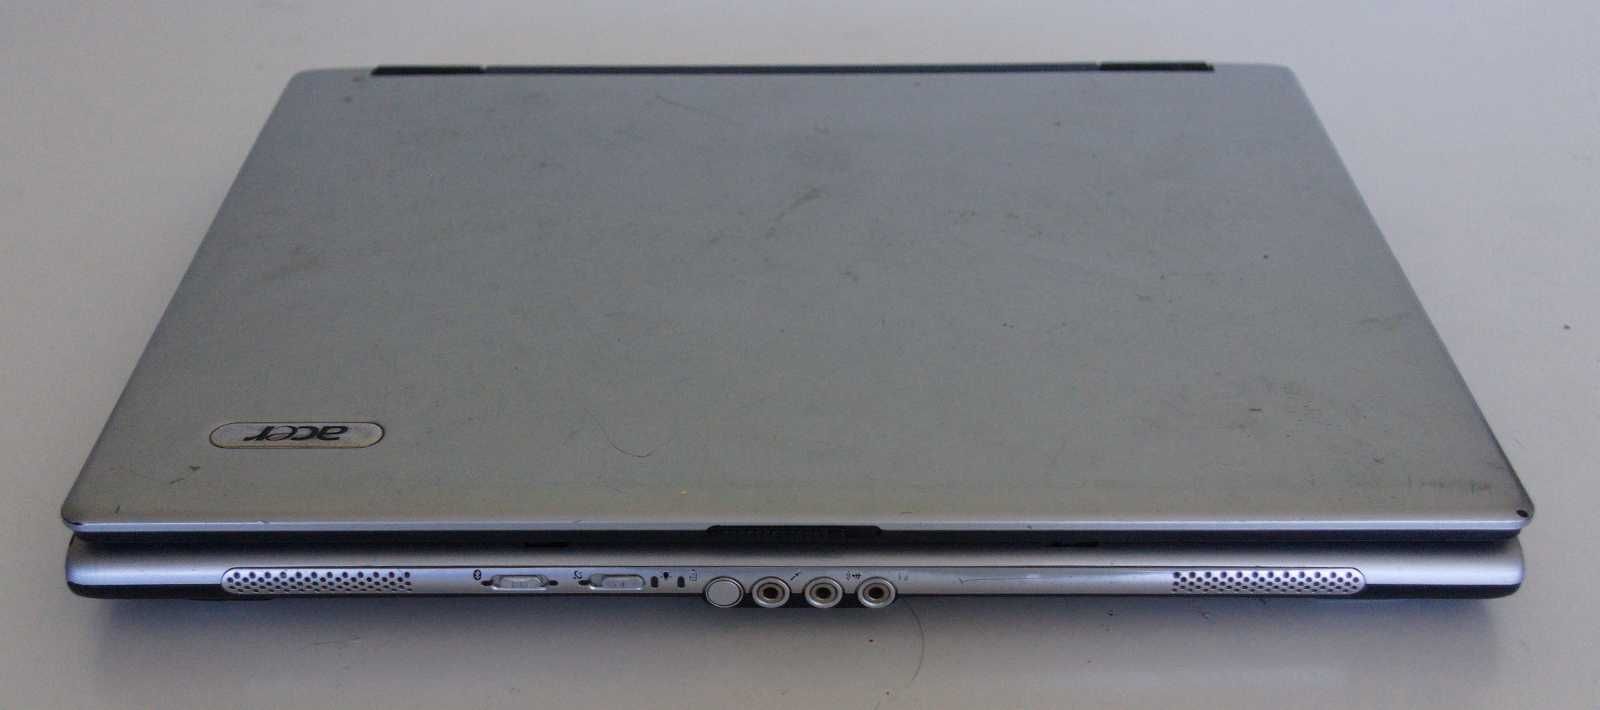 Laptop Acer Travelmate 4200